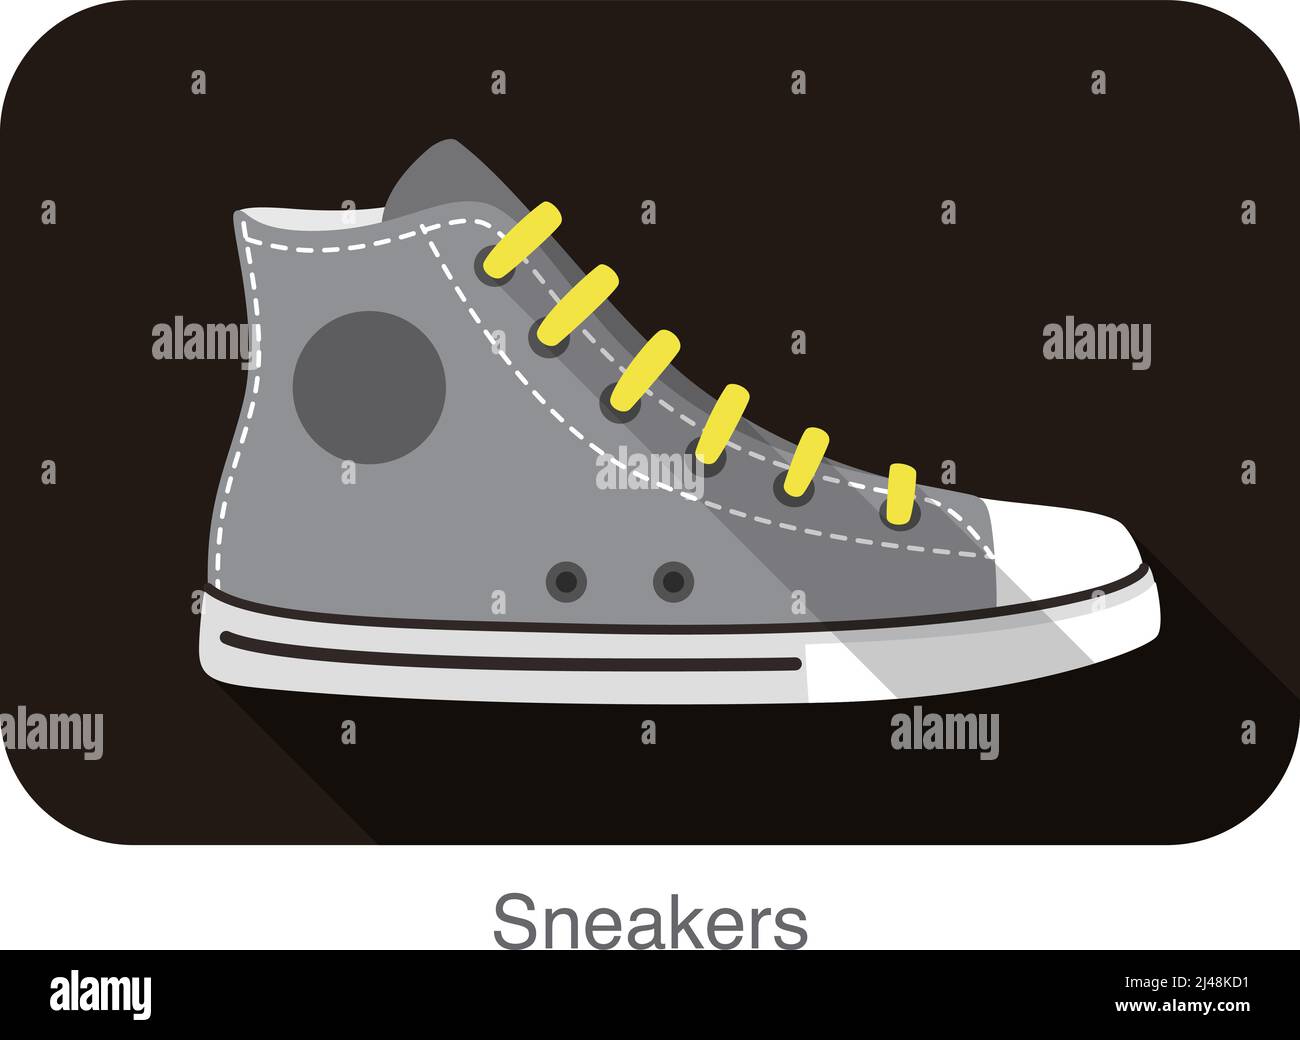 Old high heel style sport sneakers shoe vector illustration Stock Vector